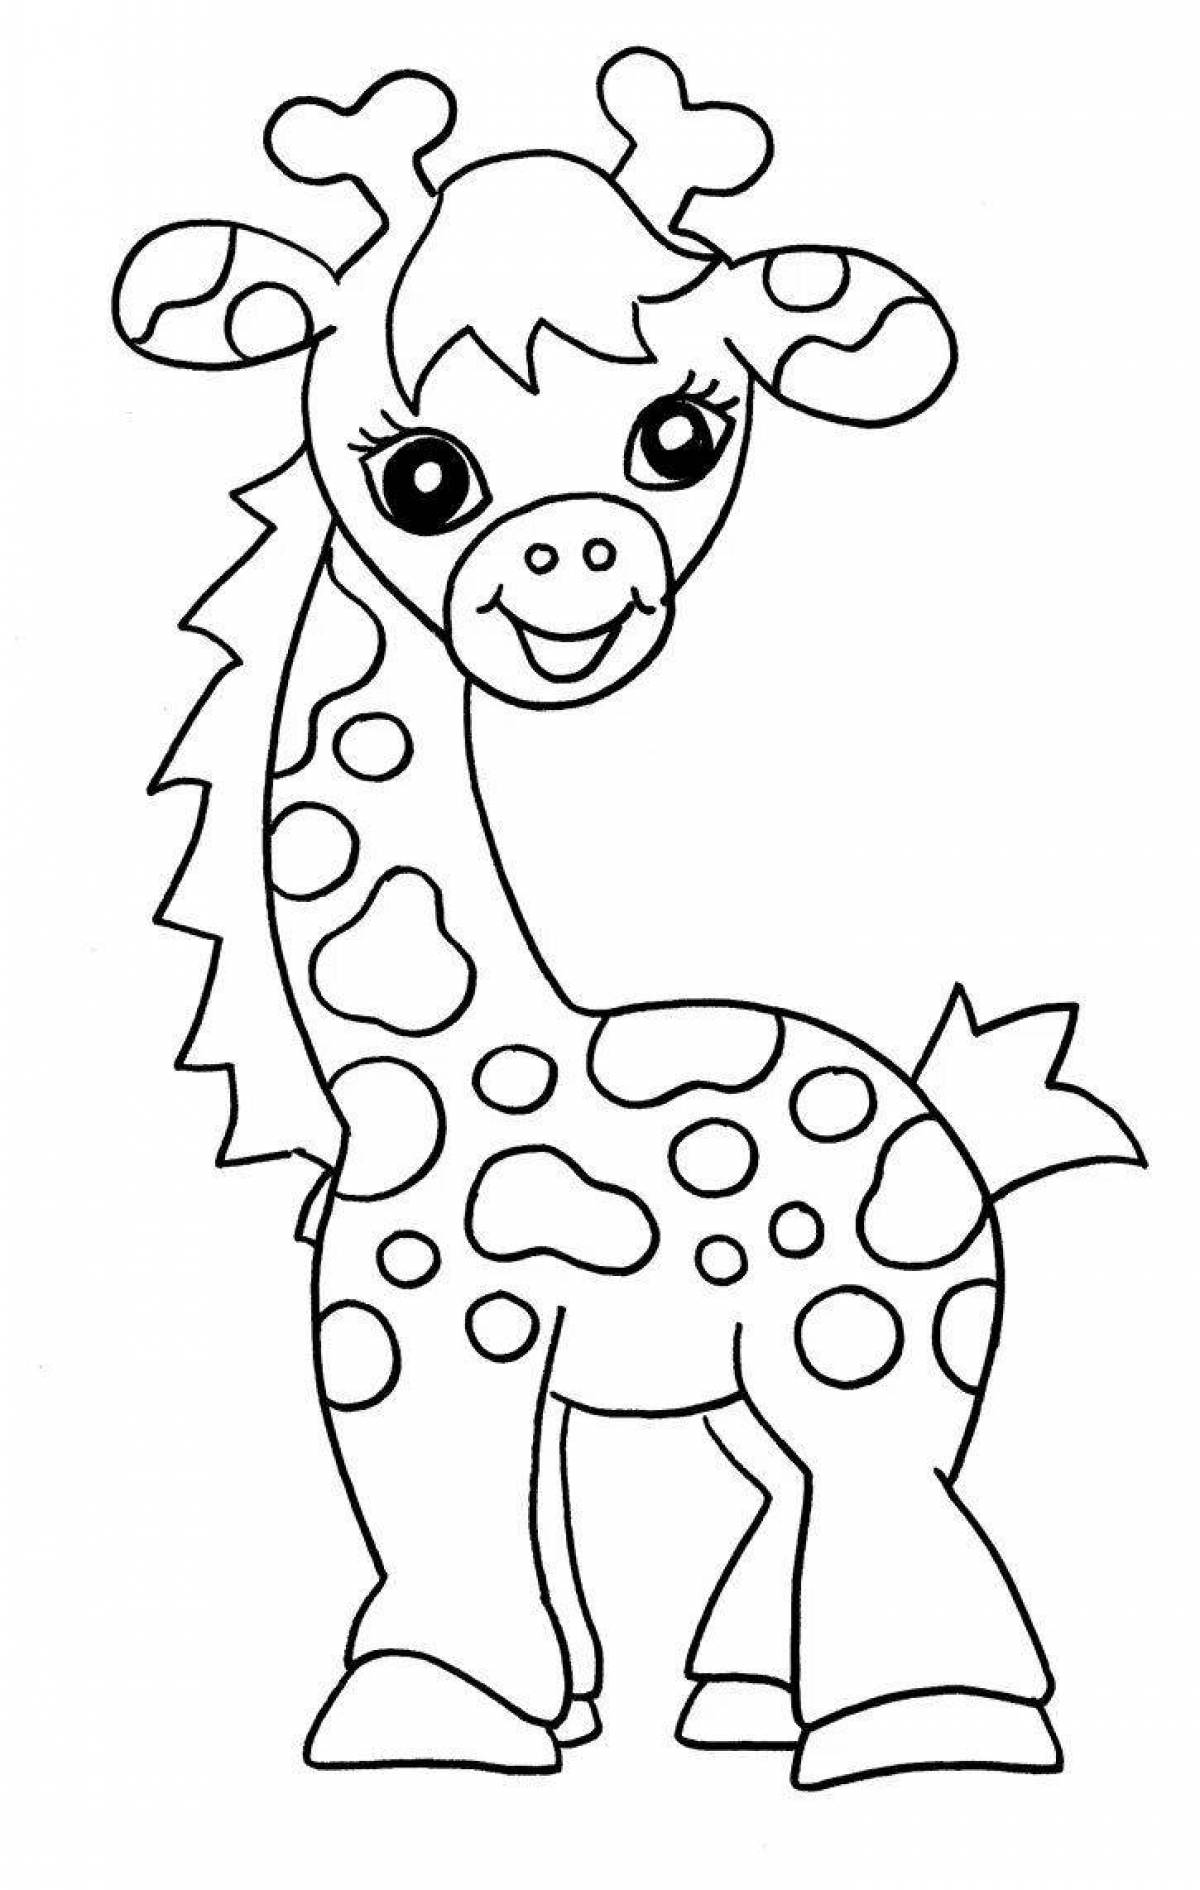 Fancy coloring giraffe for kids